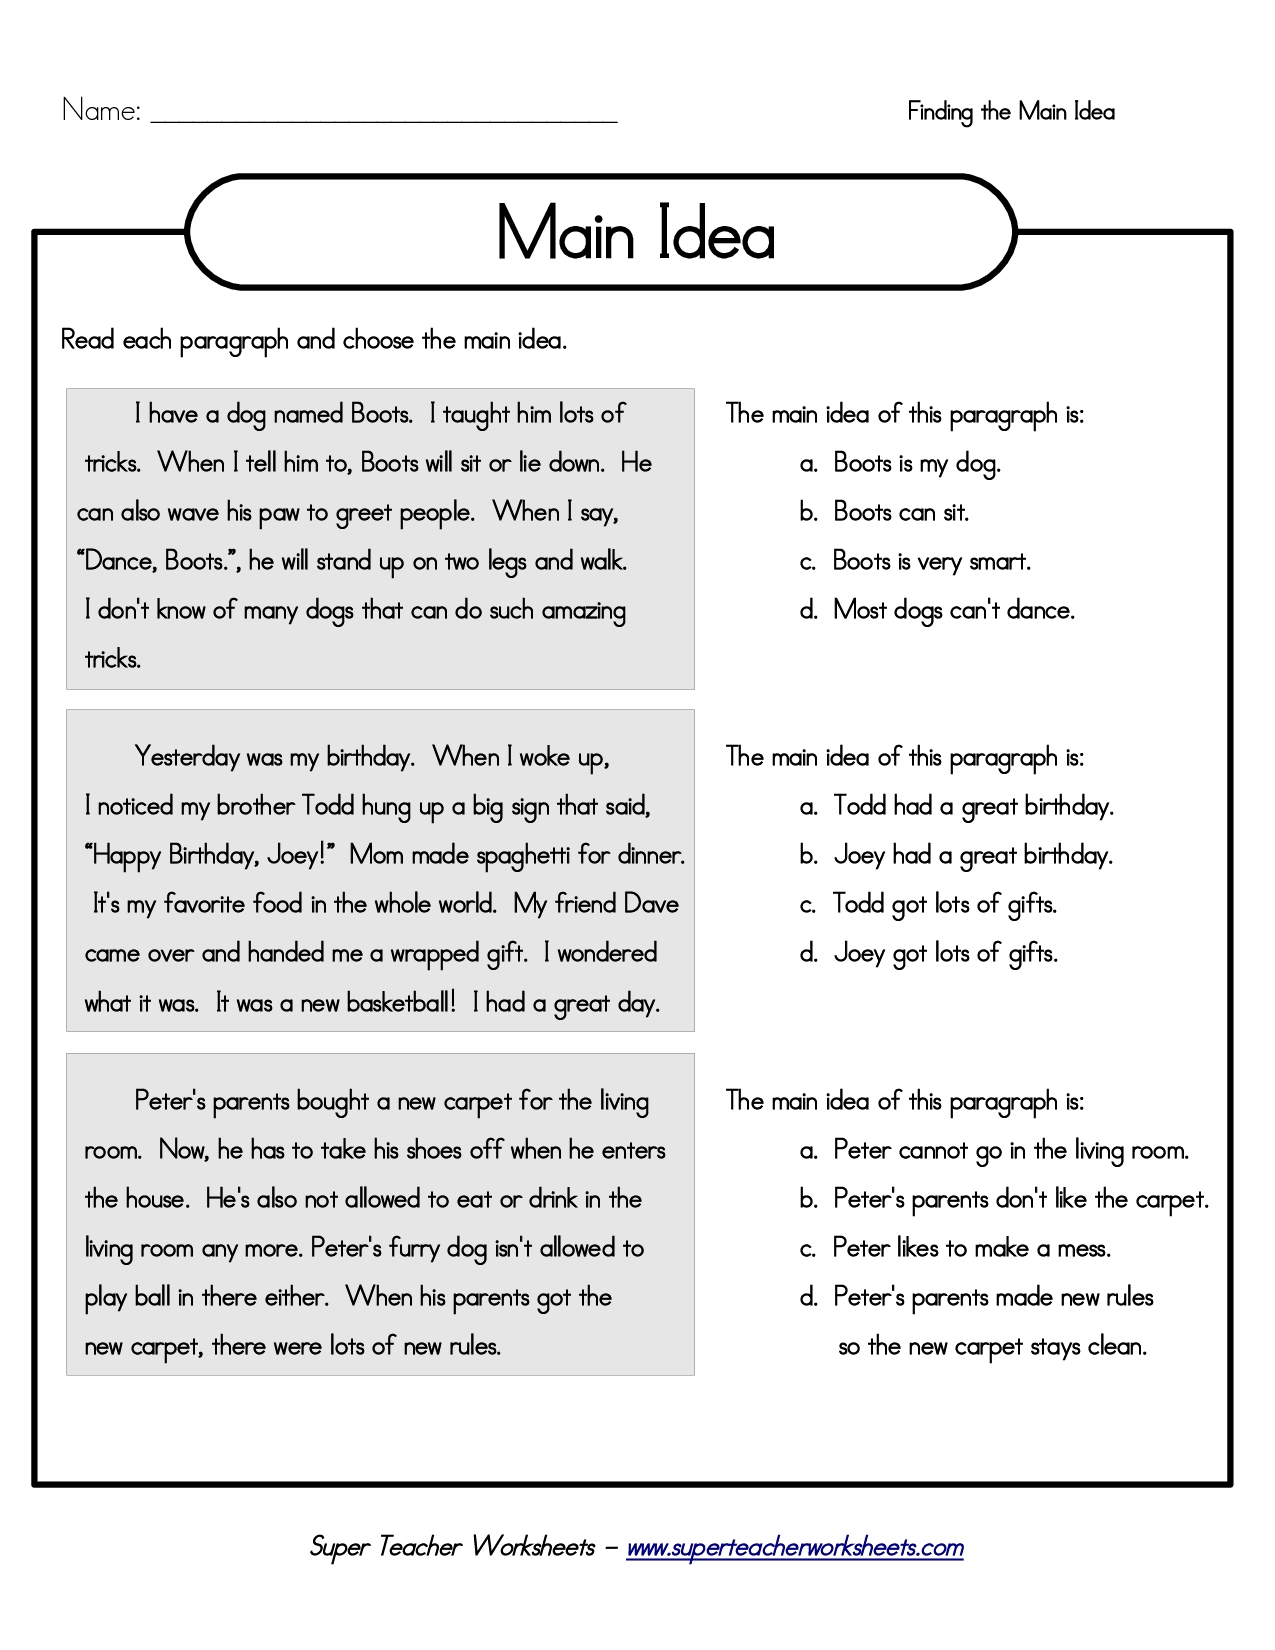 10 Beautiful Main Idea Worksheets 6Th Grade sample 3rd grade paragraph finding the main idea main idea 14 2023